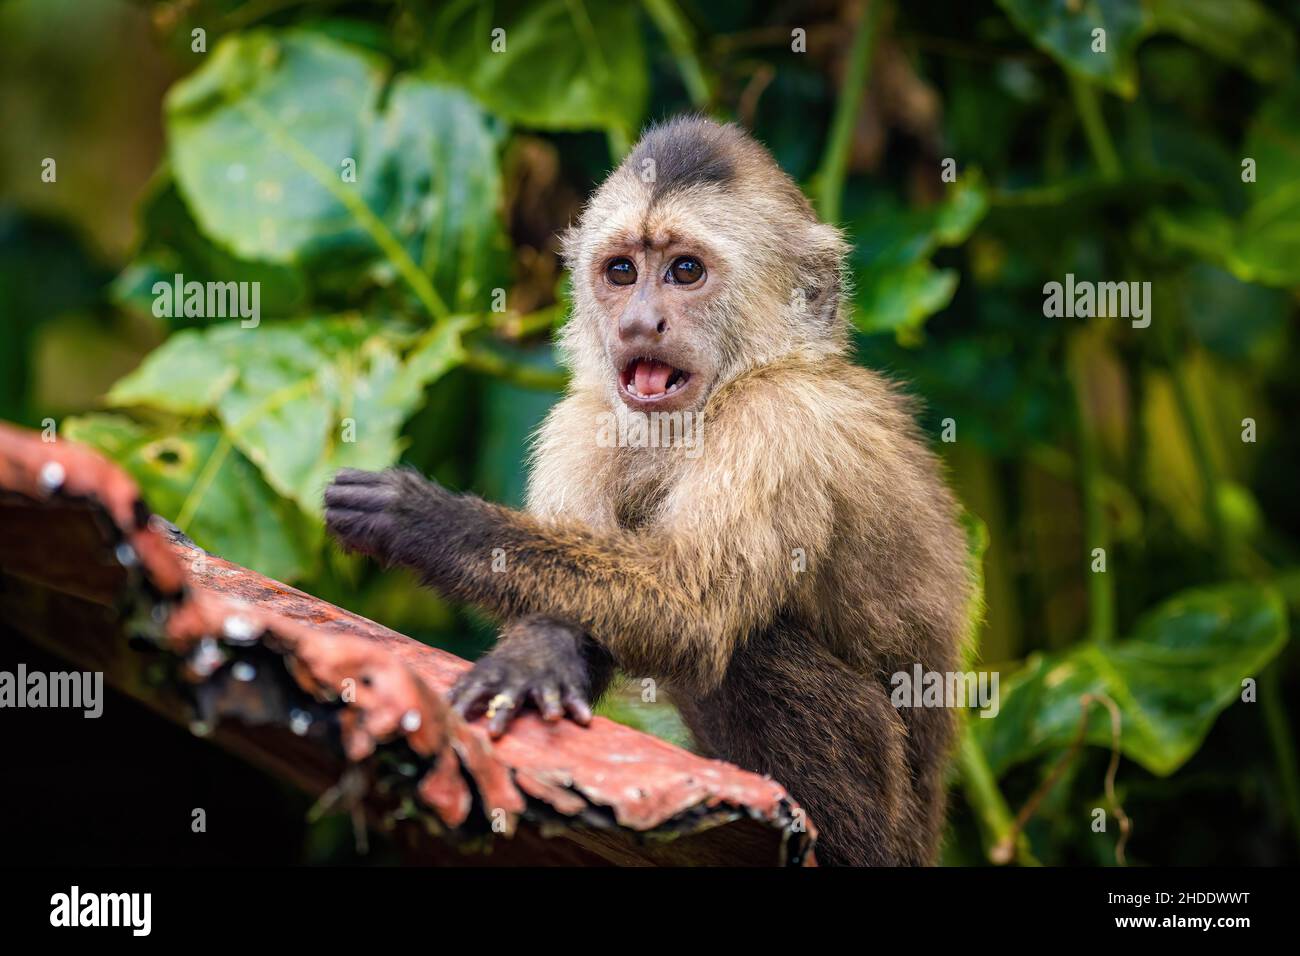 Surprised portrait of capuchin wild monkey sitting on tree in jungle Stock Photo